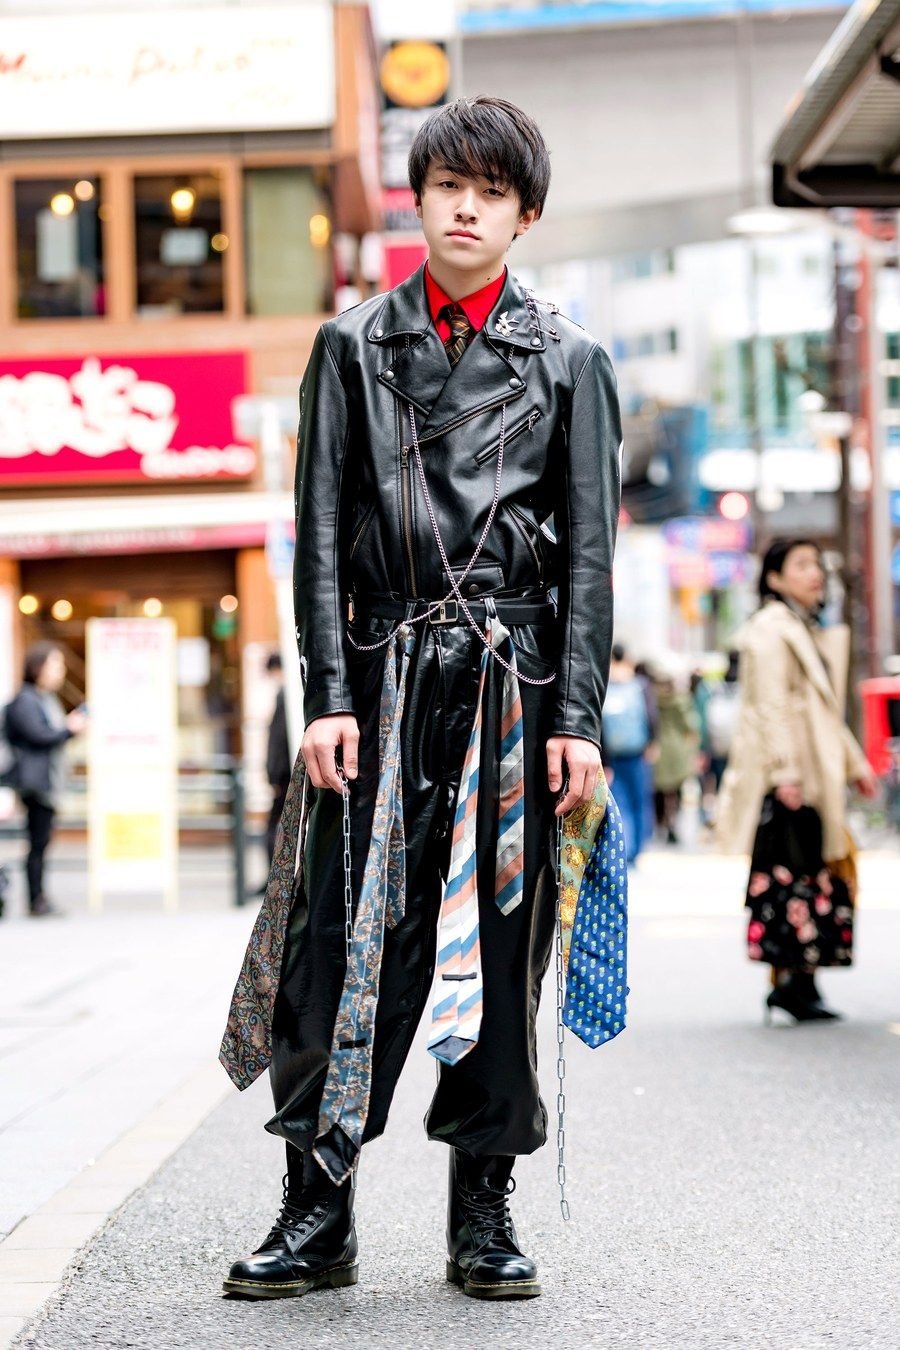 Токийские одежда. Одежда мужская Токио стрит стайл. Японская мода Харадзюку мужская. Харадзюку стиль мужской. Streetstyle Япония мужская.